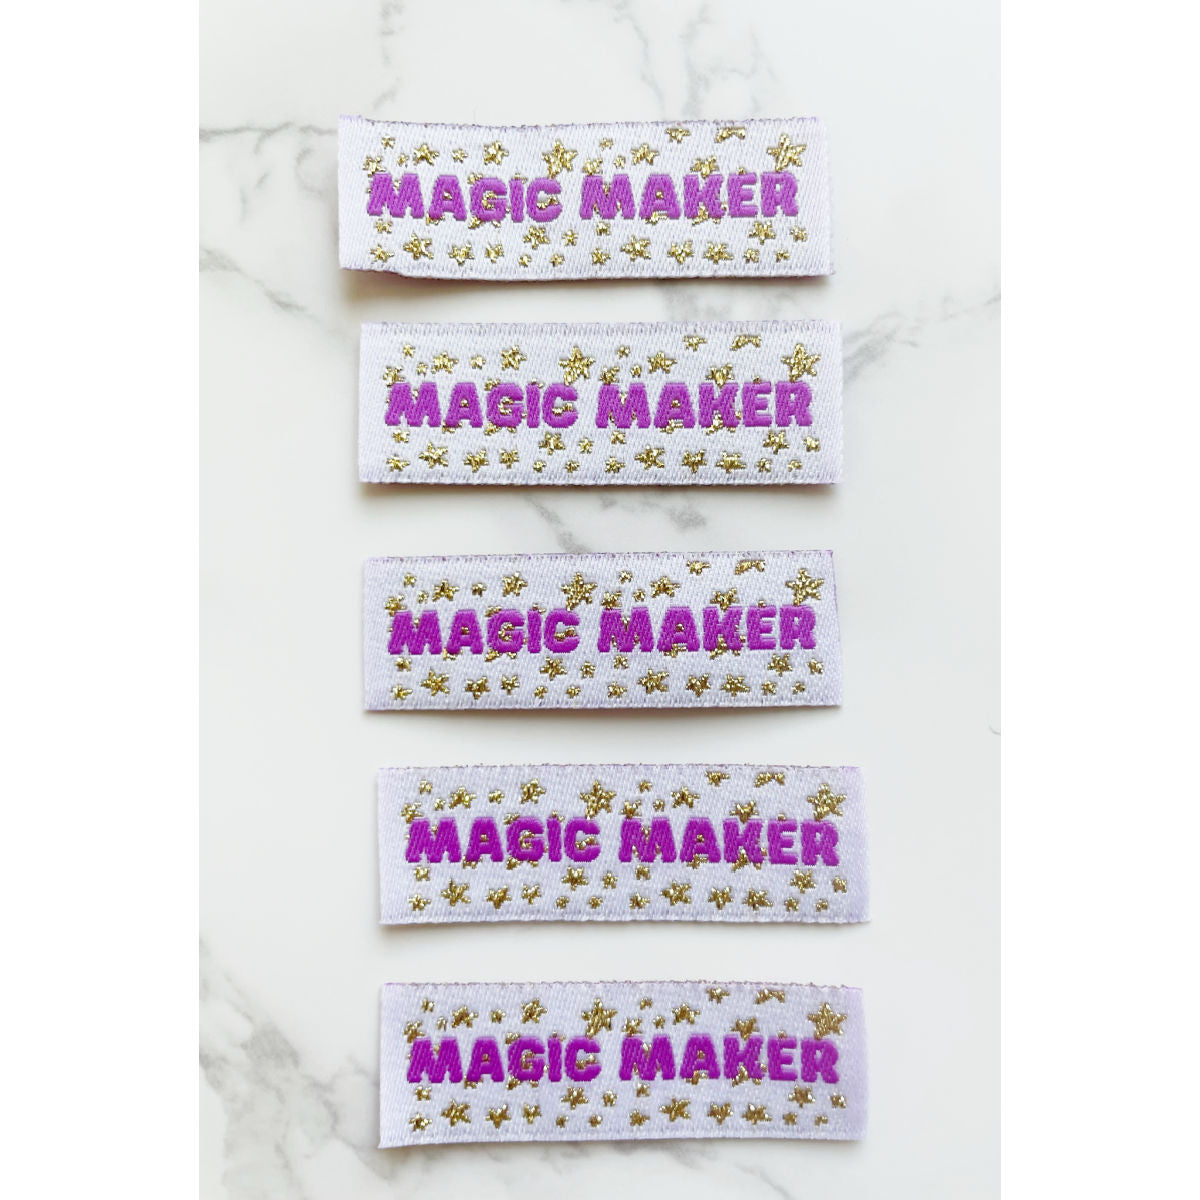 Magic Maker label 5 pack